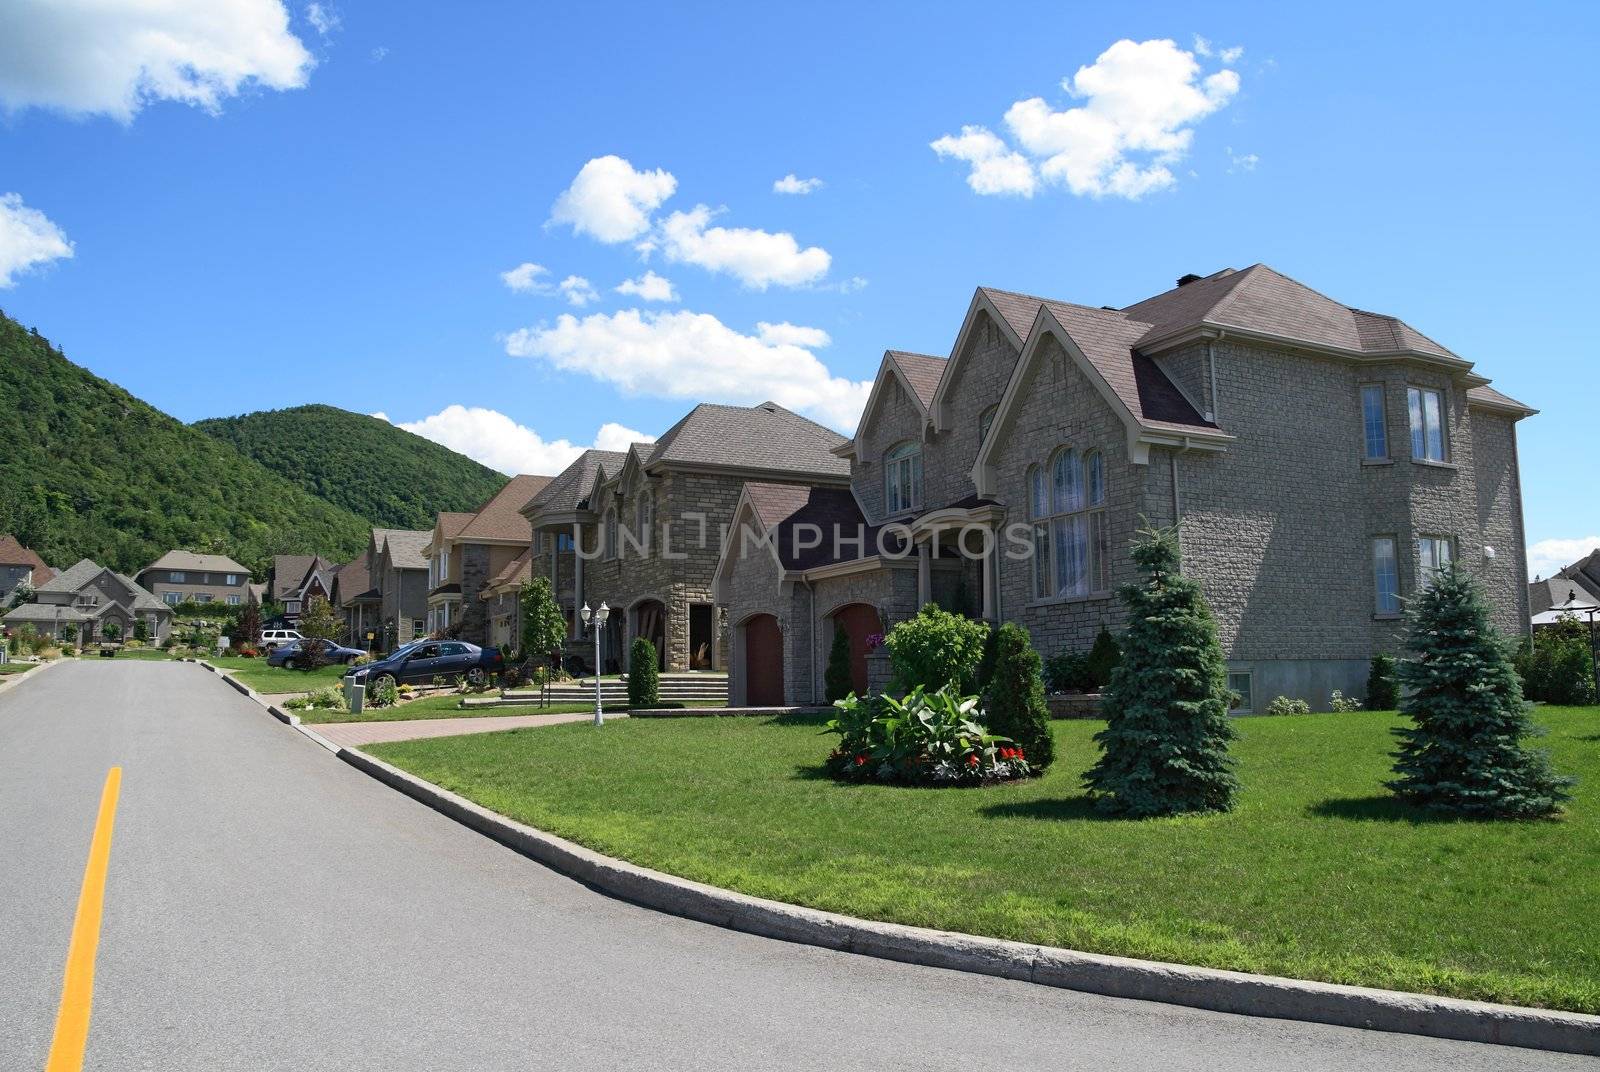 Expensive houses in a prestigious suburban neighborhood near the mountain.